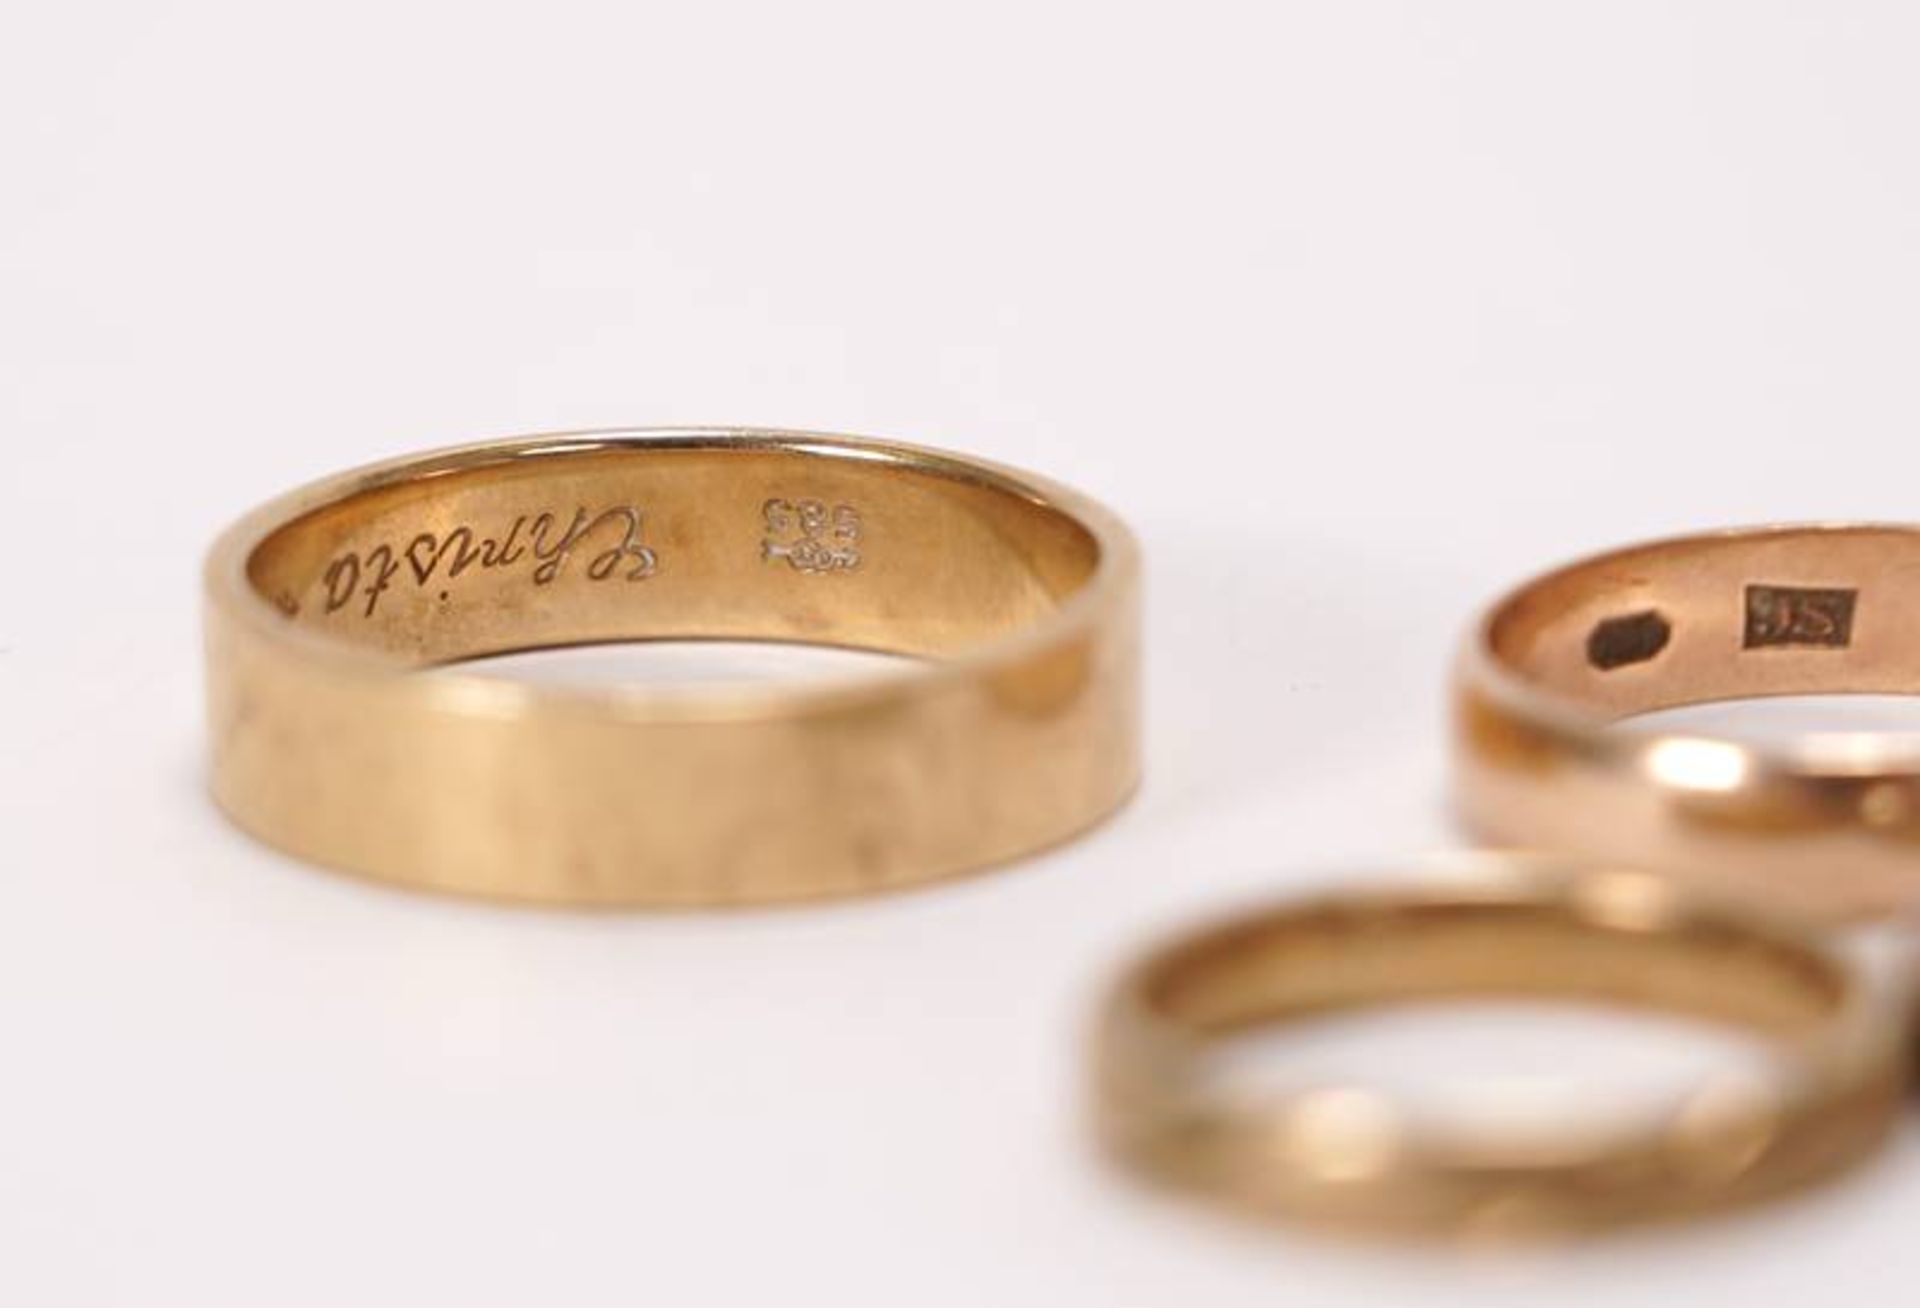 Convolute of wedding rings - Image 2 of 3